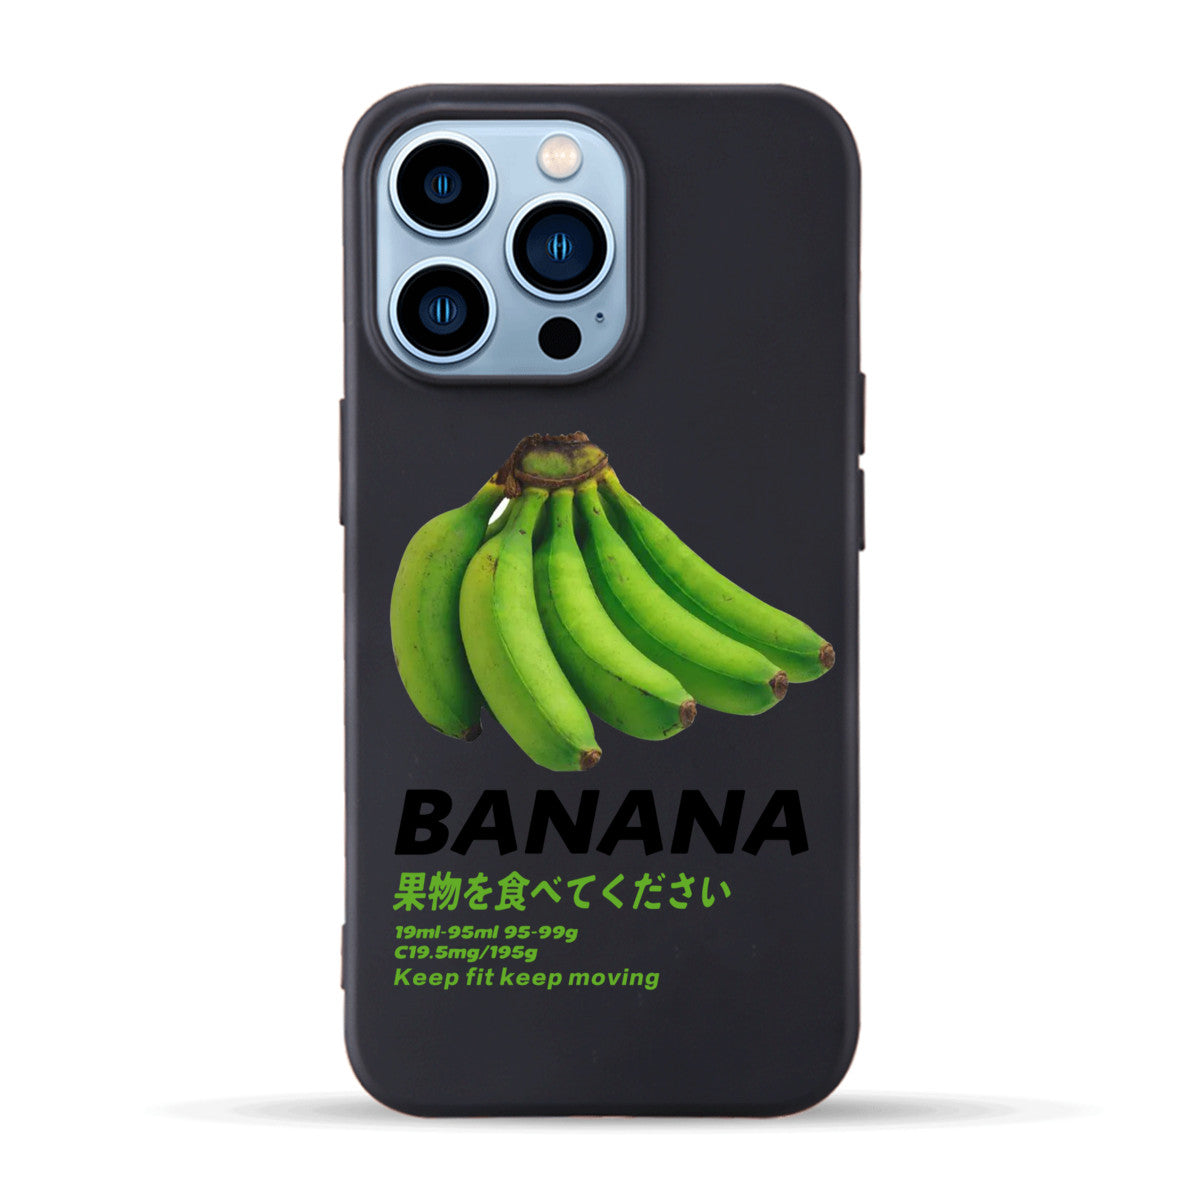 Banana - iPhone Case